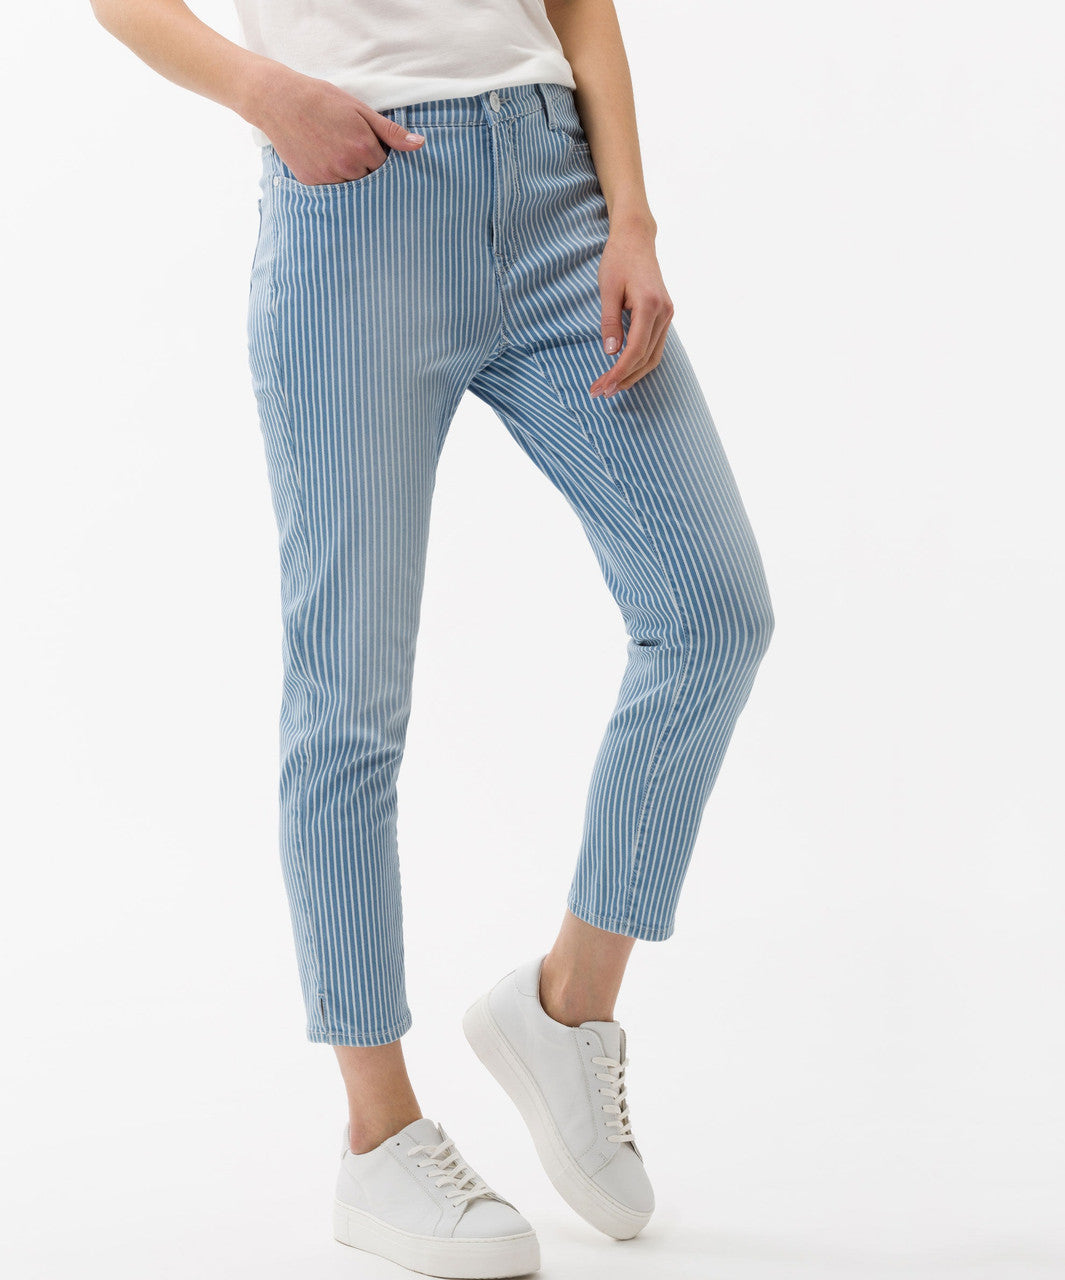 Brax Mary Blue/White Stripe 7/8 Jeans